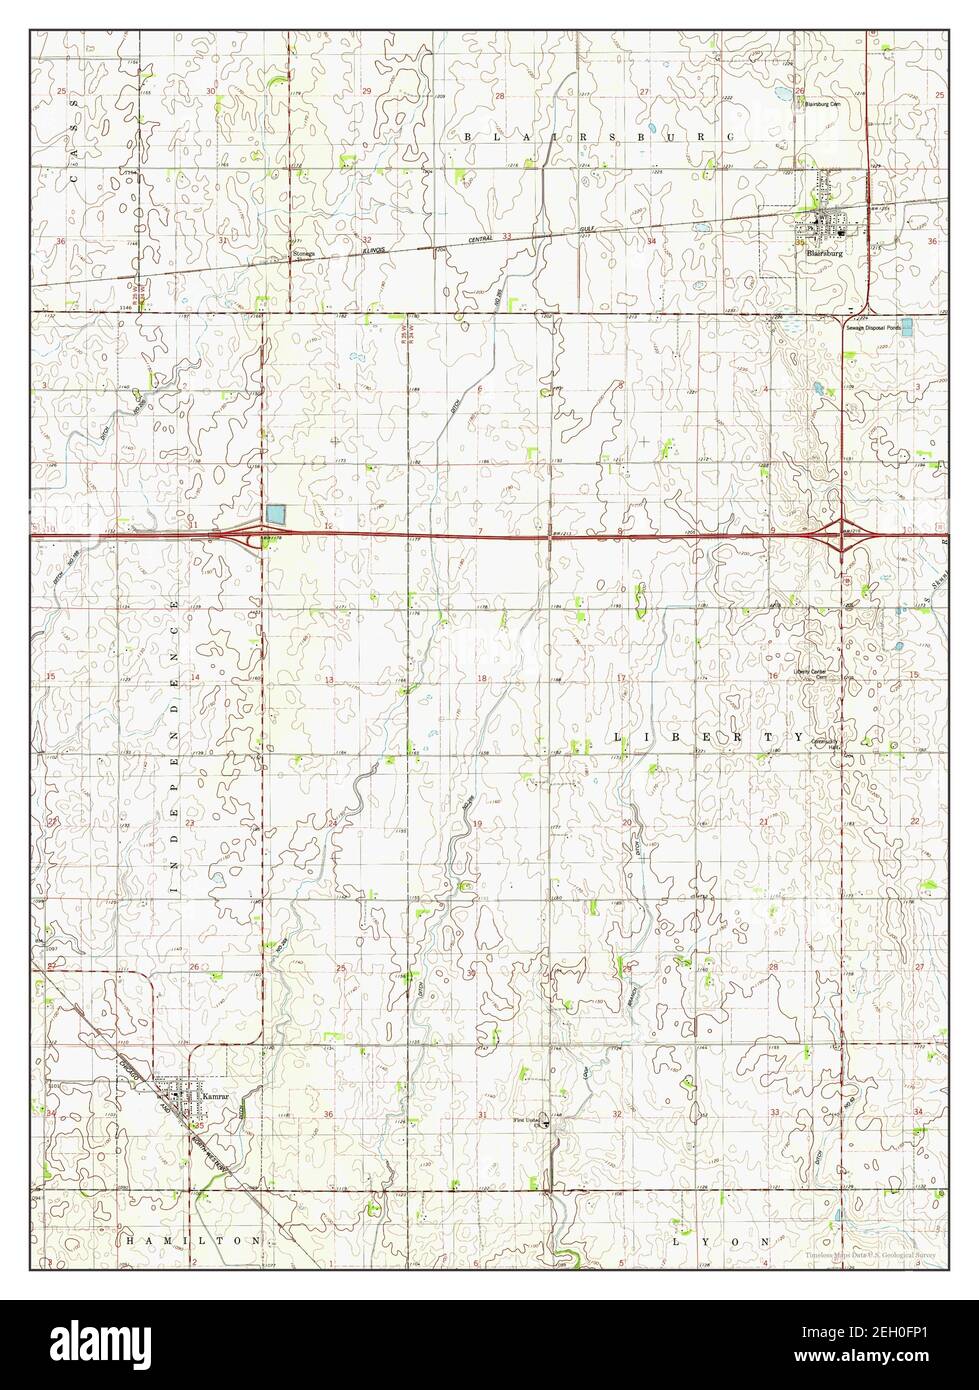 Blairsburg, Iowa, map 1978, 1:24000, United States of America by Timeless Maps, data U.S. Geological Survey Stock Photo